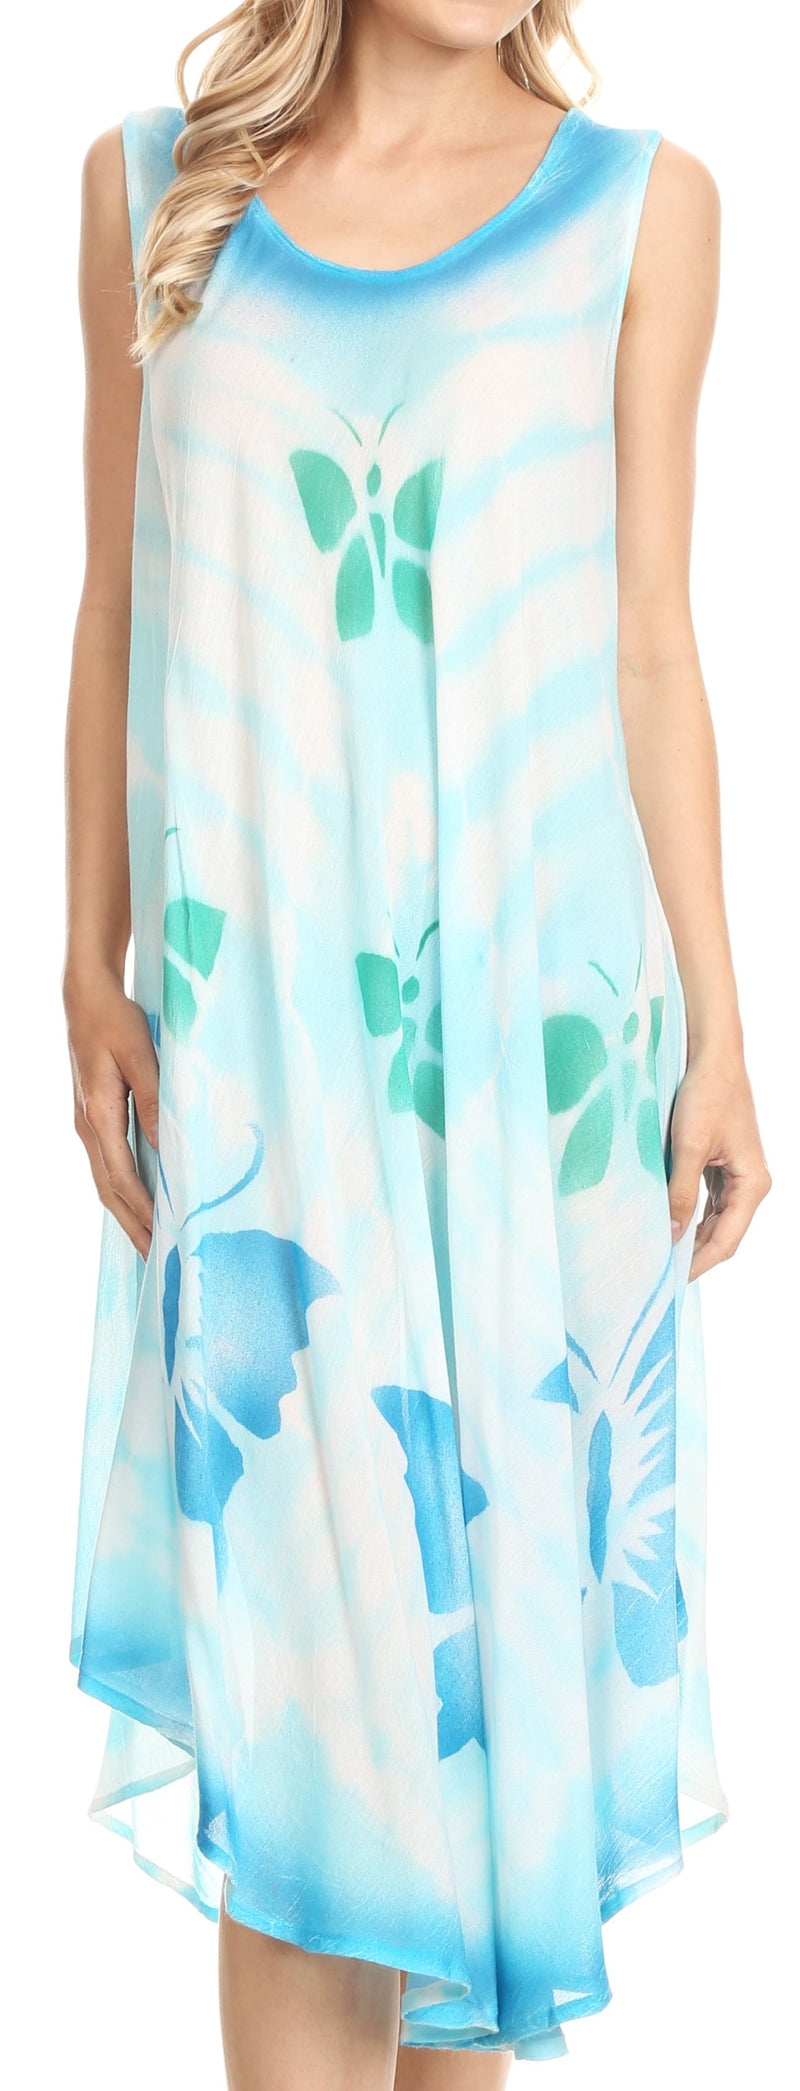 Sakkas Nisa Sleeveless Summer Caftan Kaftan Tie-dye Cover-up Dress Light & Breezy